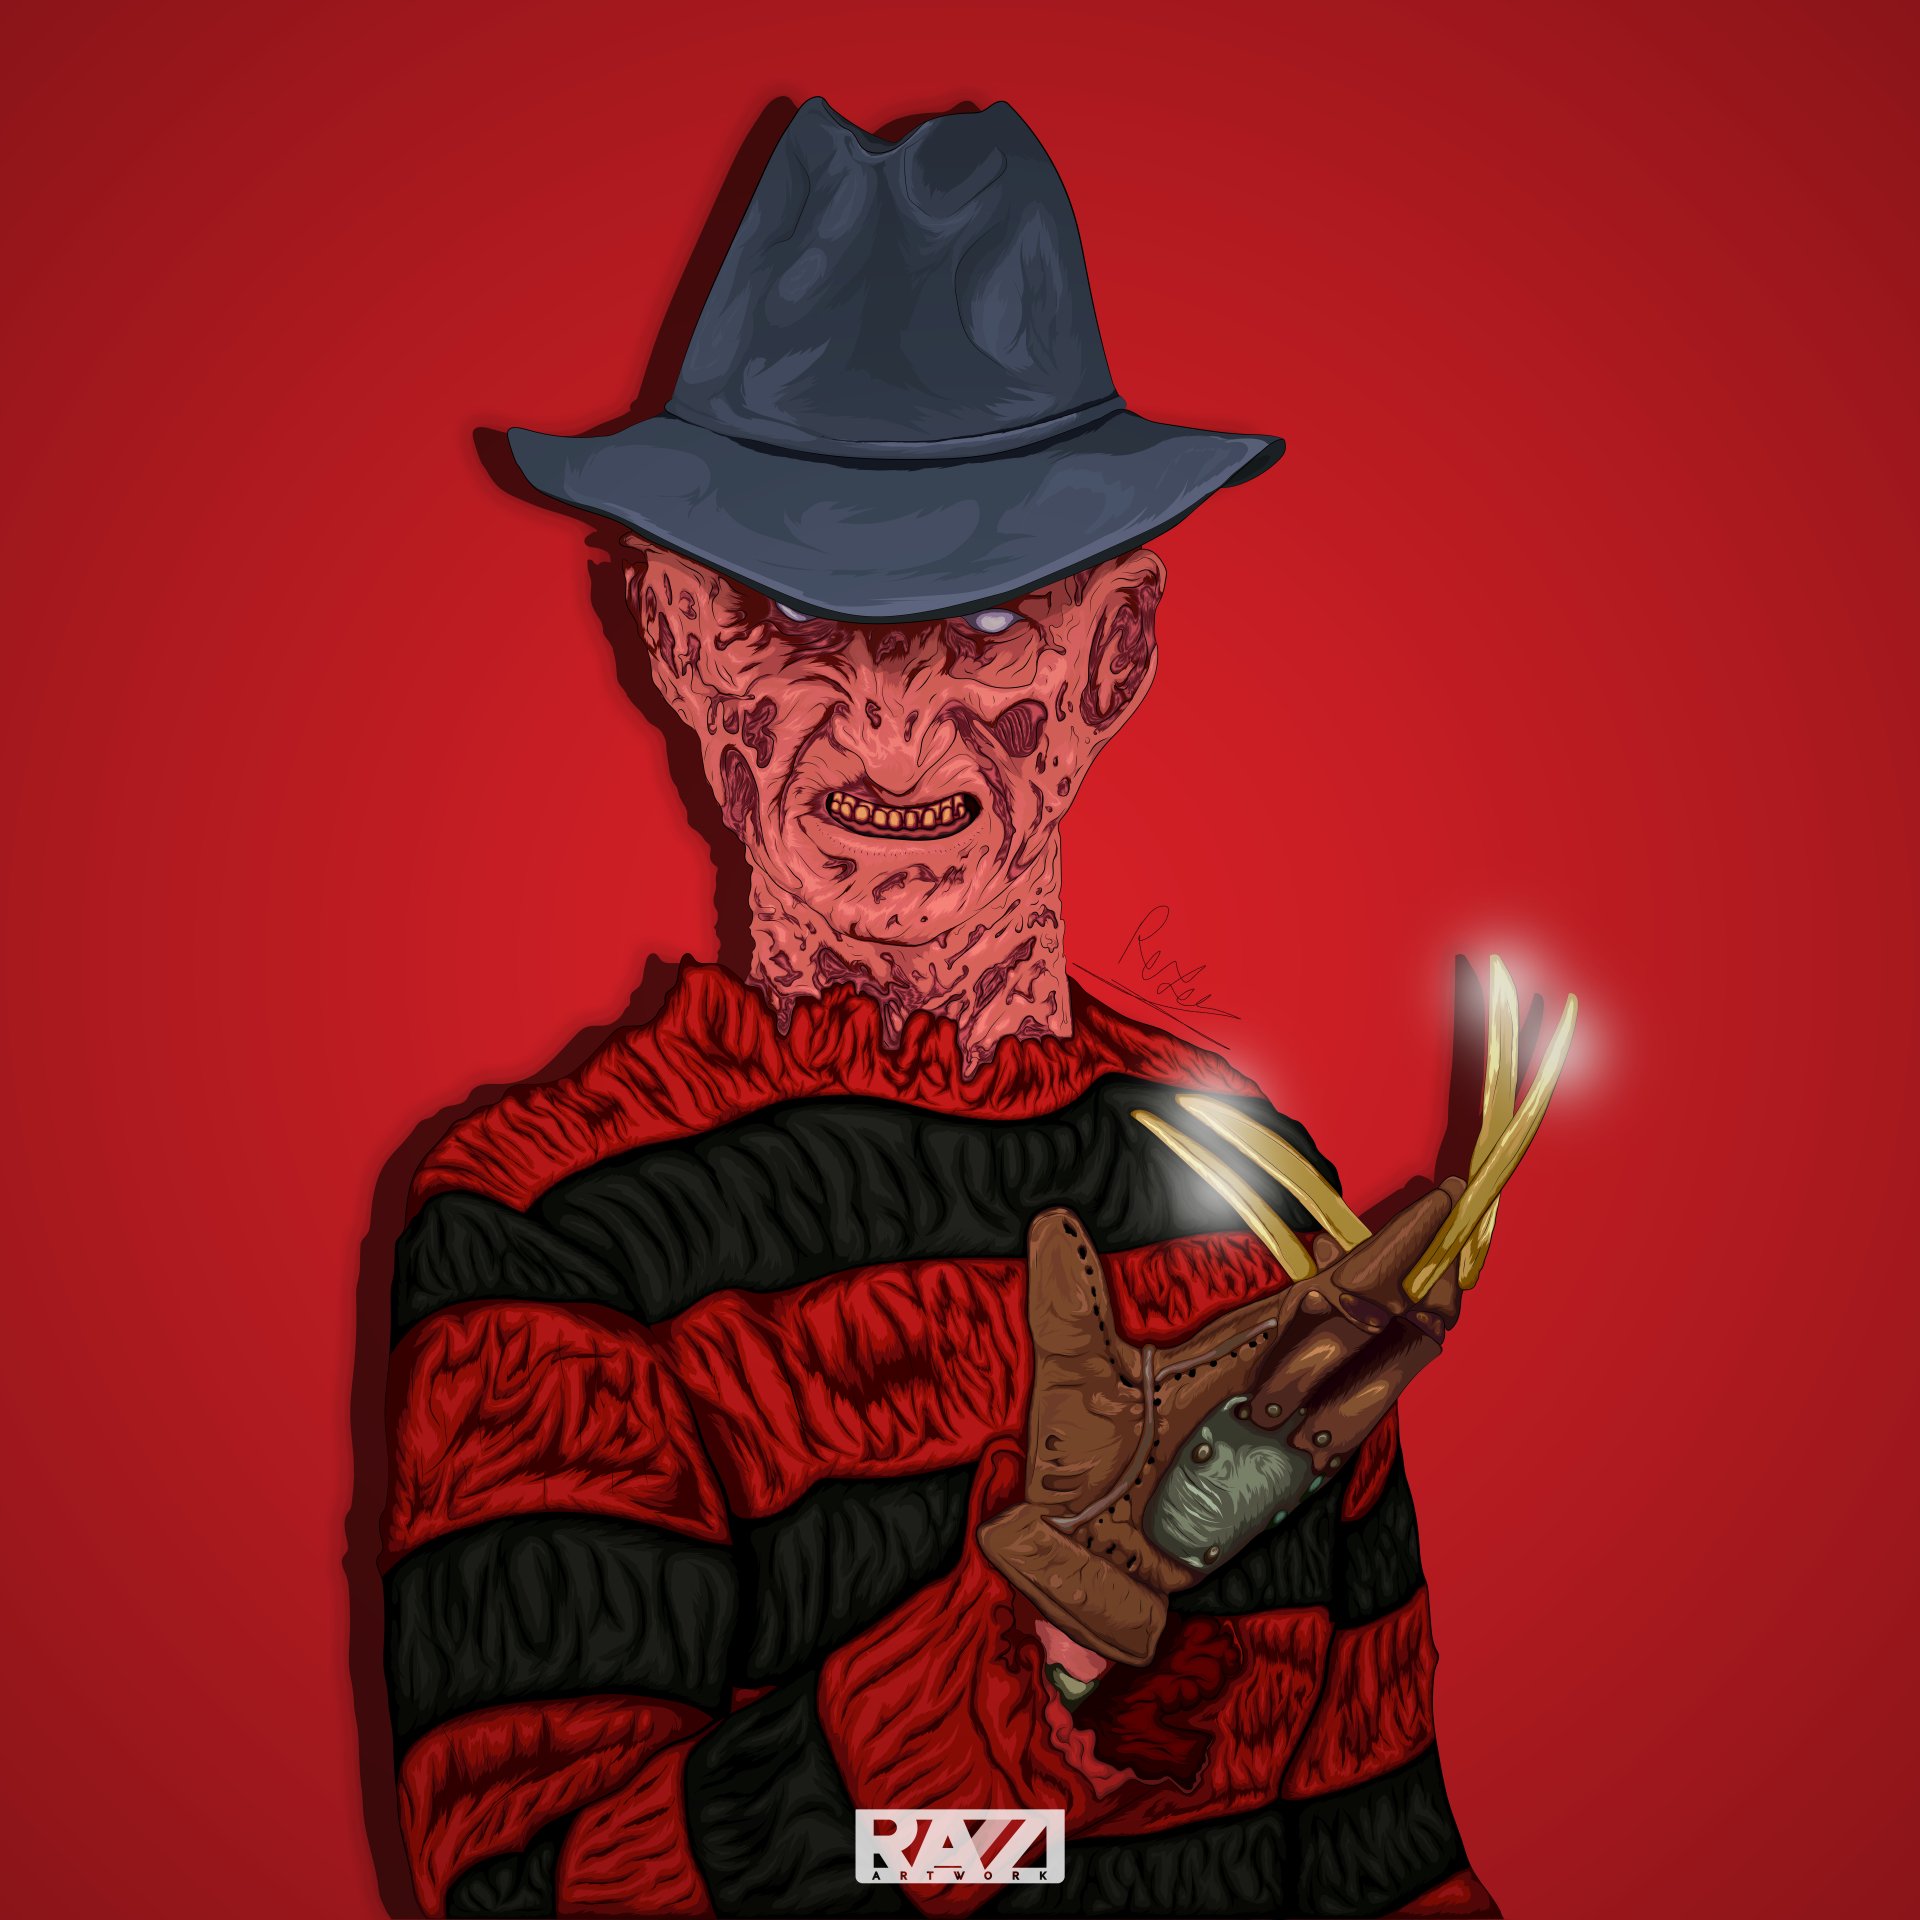 Freddy Krueger movie A Nightmare on Elm Street (1984) Image